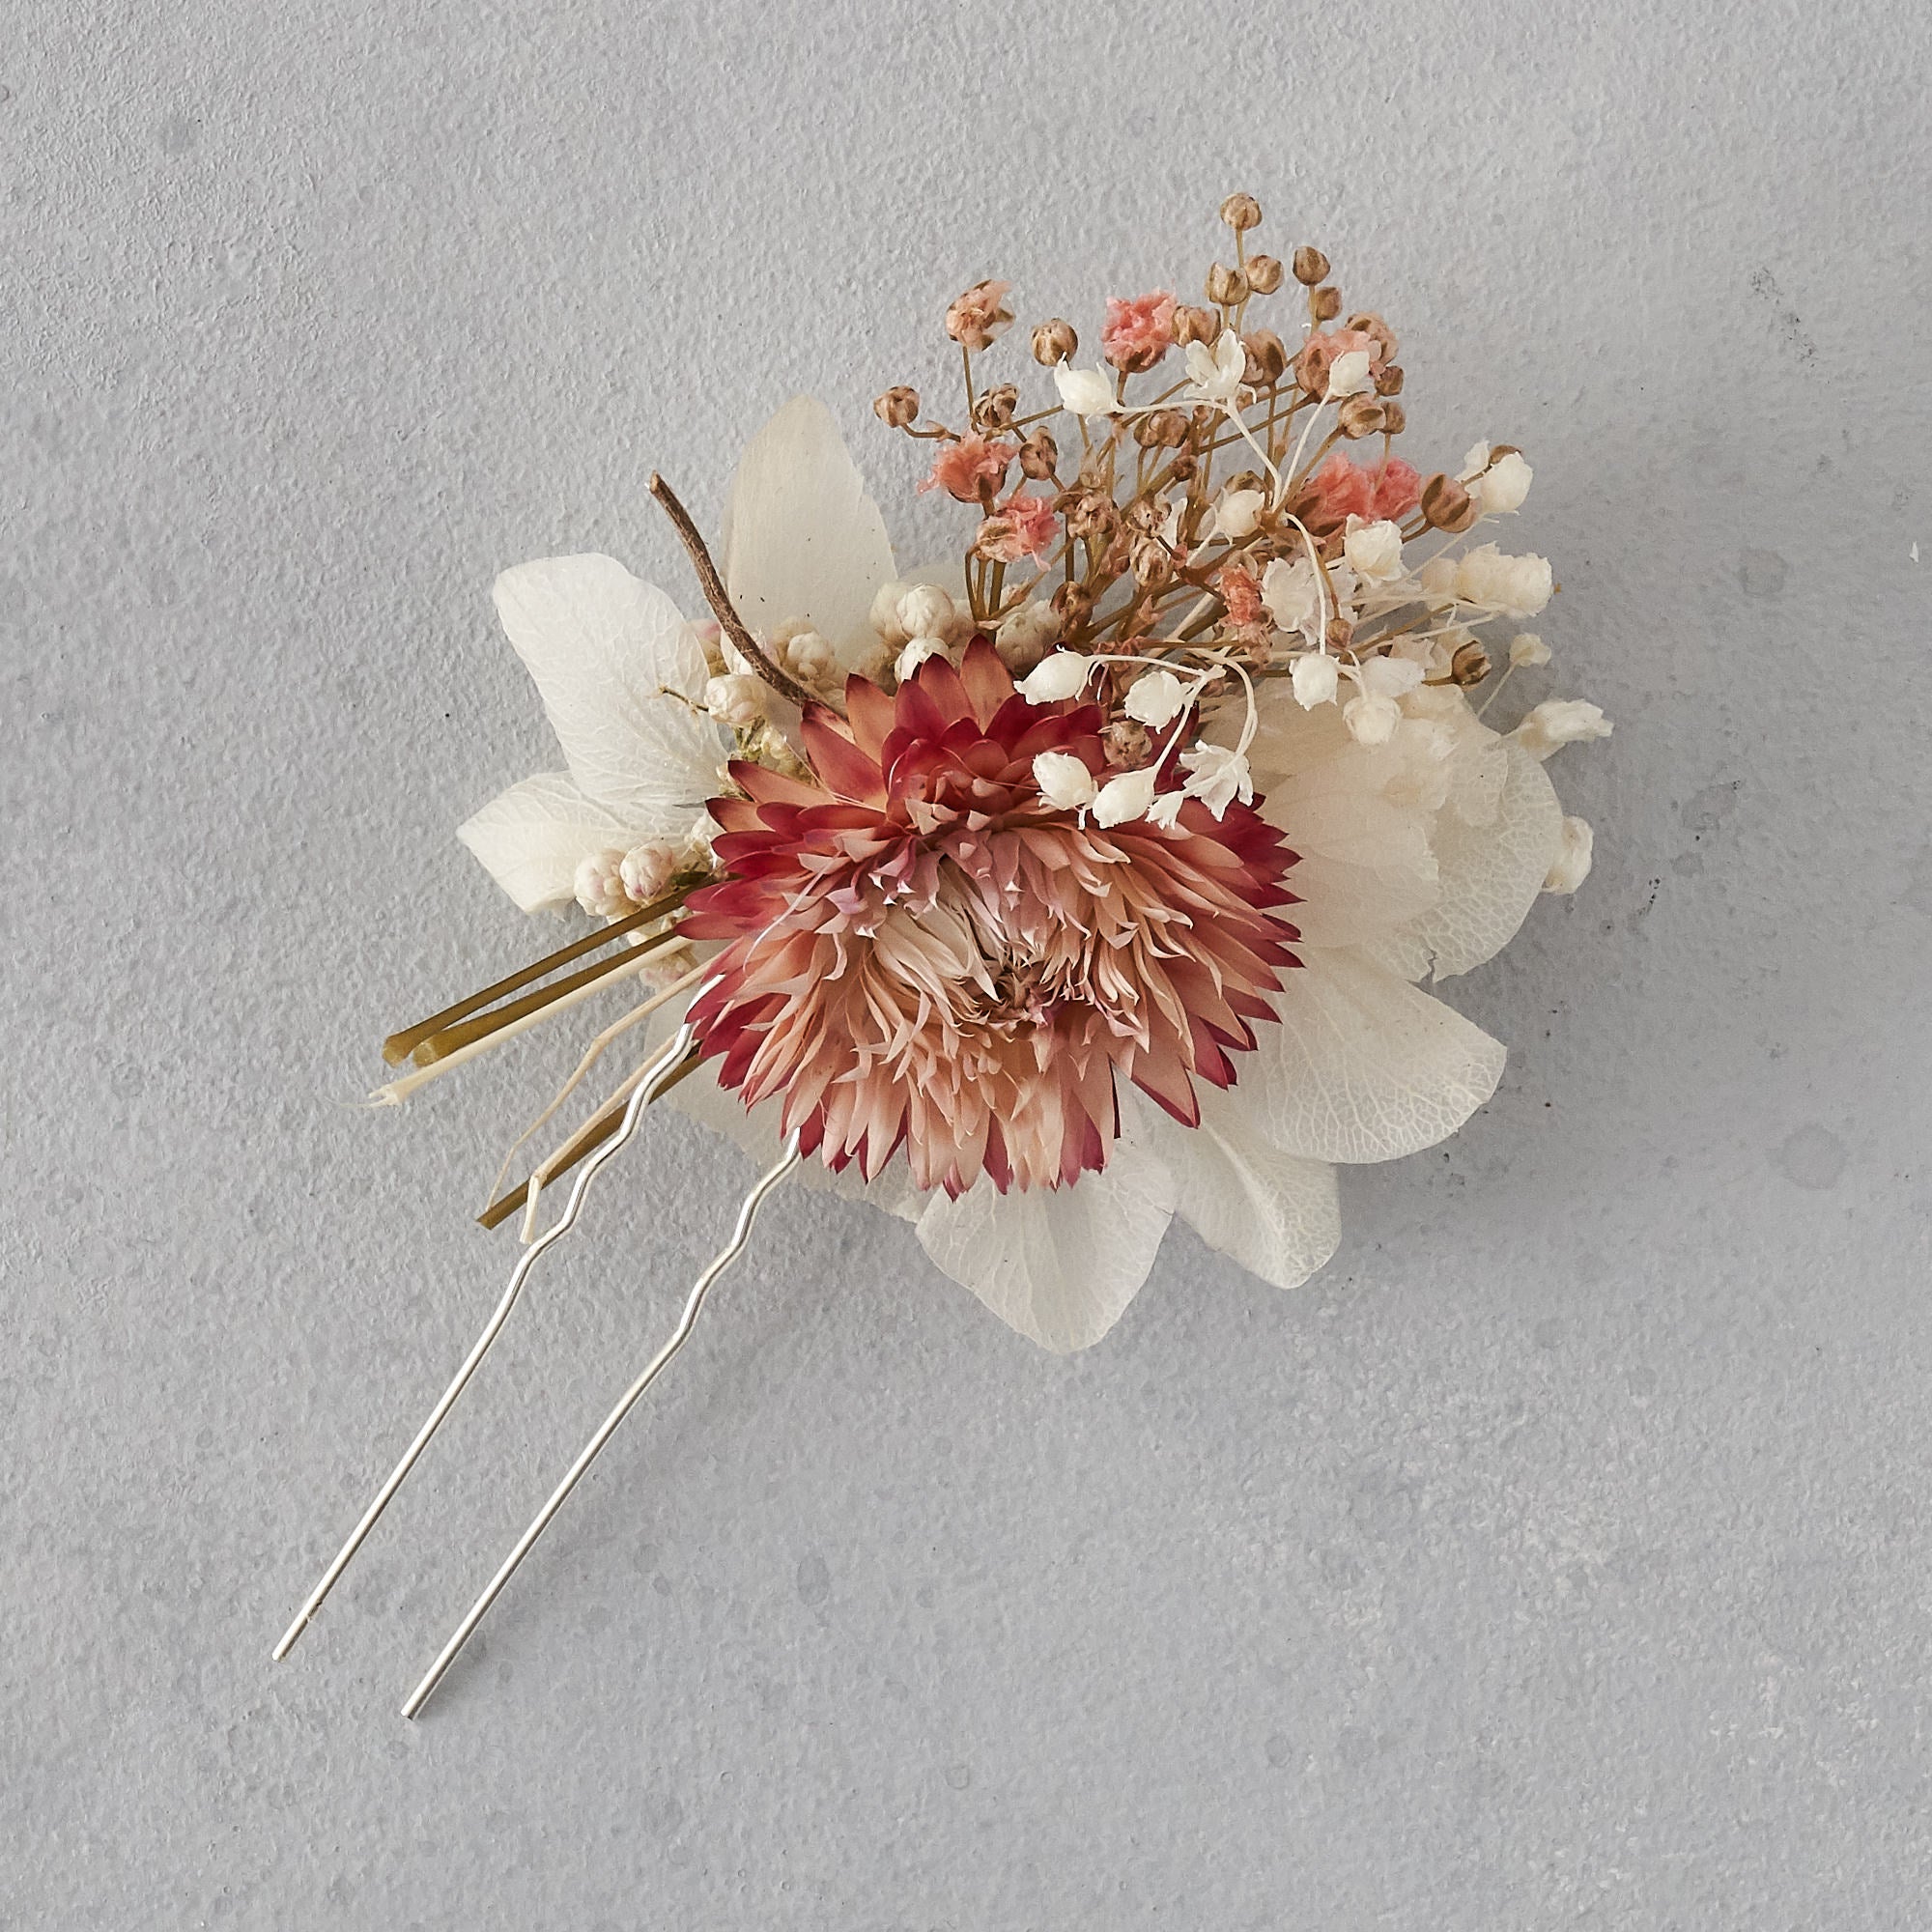 Dried flower hair pin : blush pink